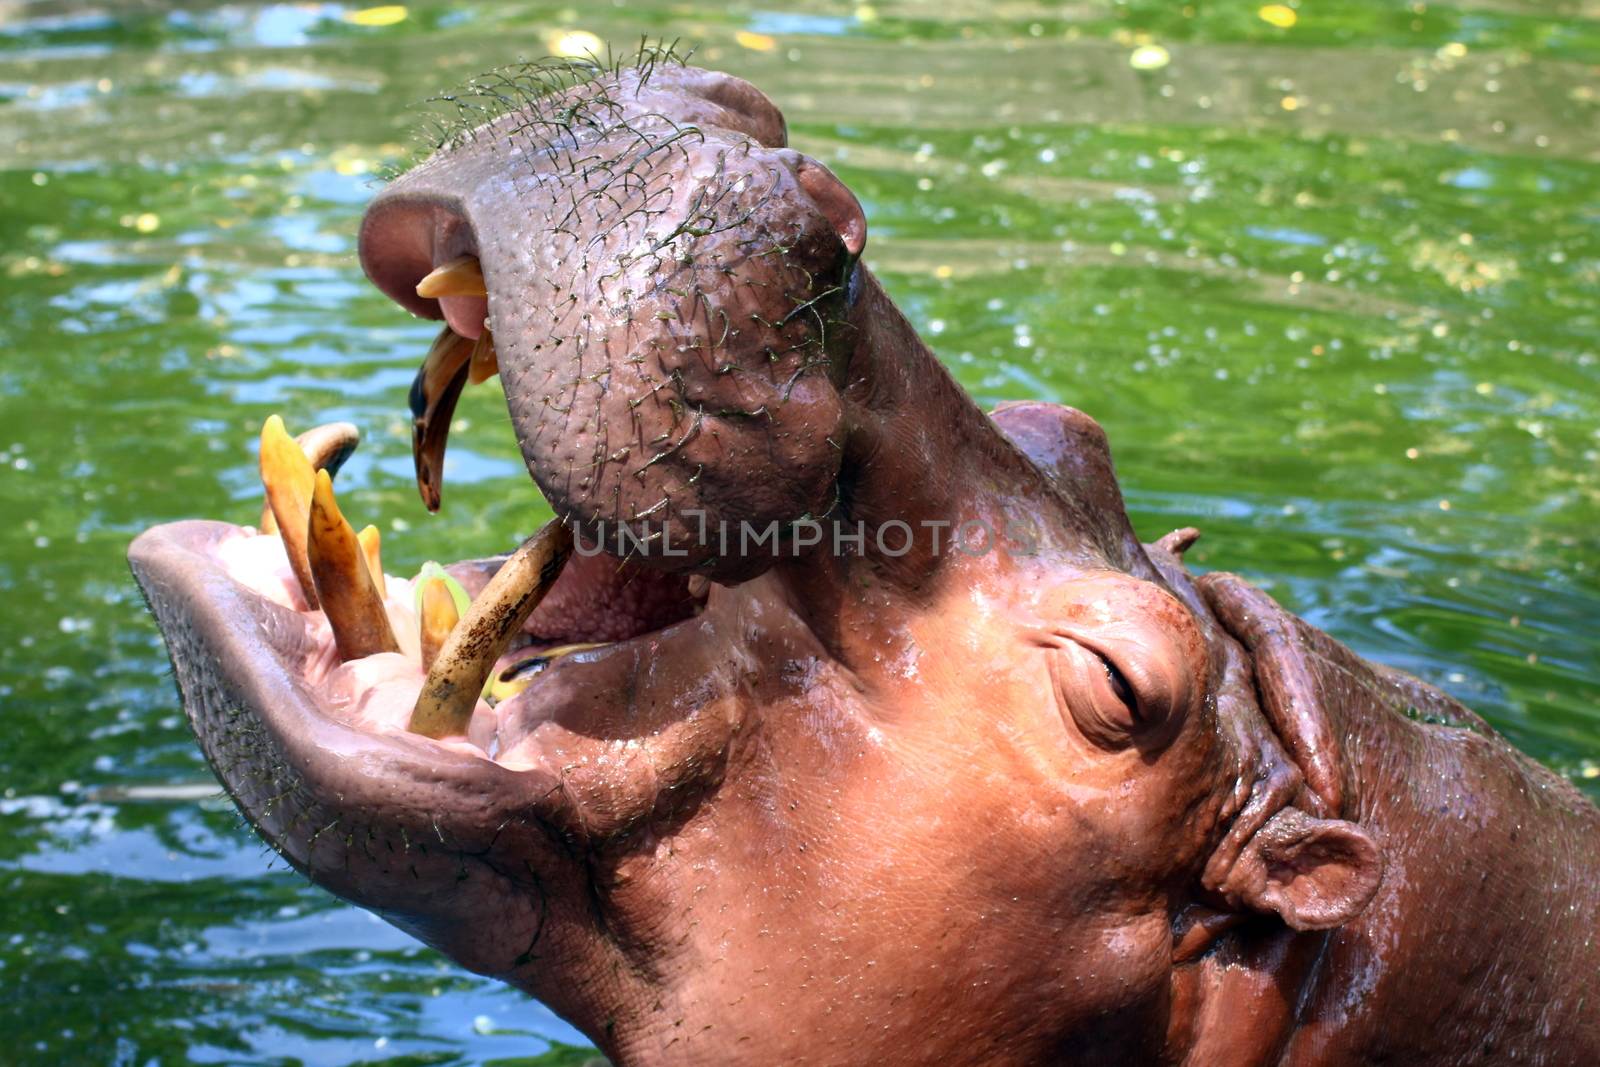 Hippo, Hippopotamus open mouth, Hippopotamus in water close up by cgdeaw